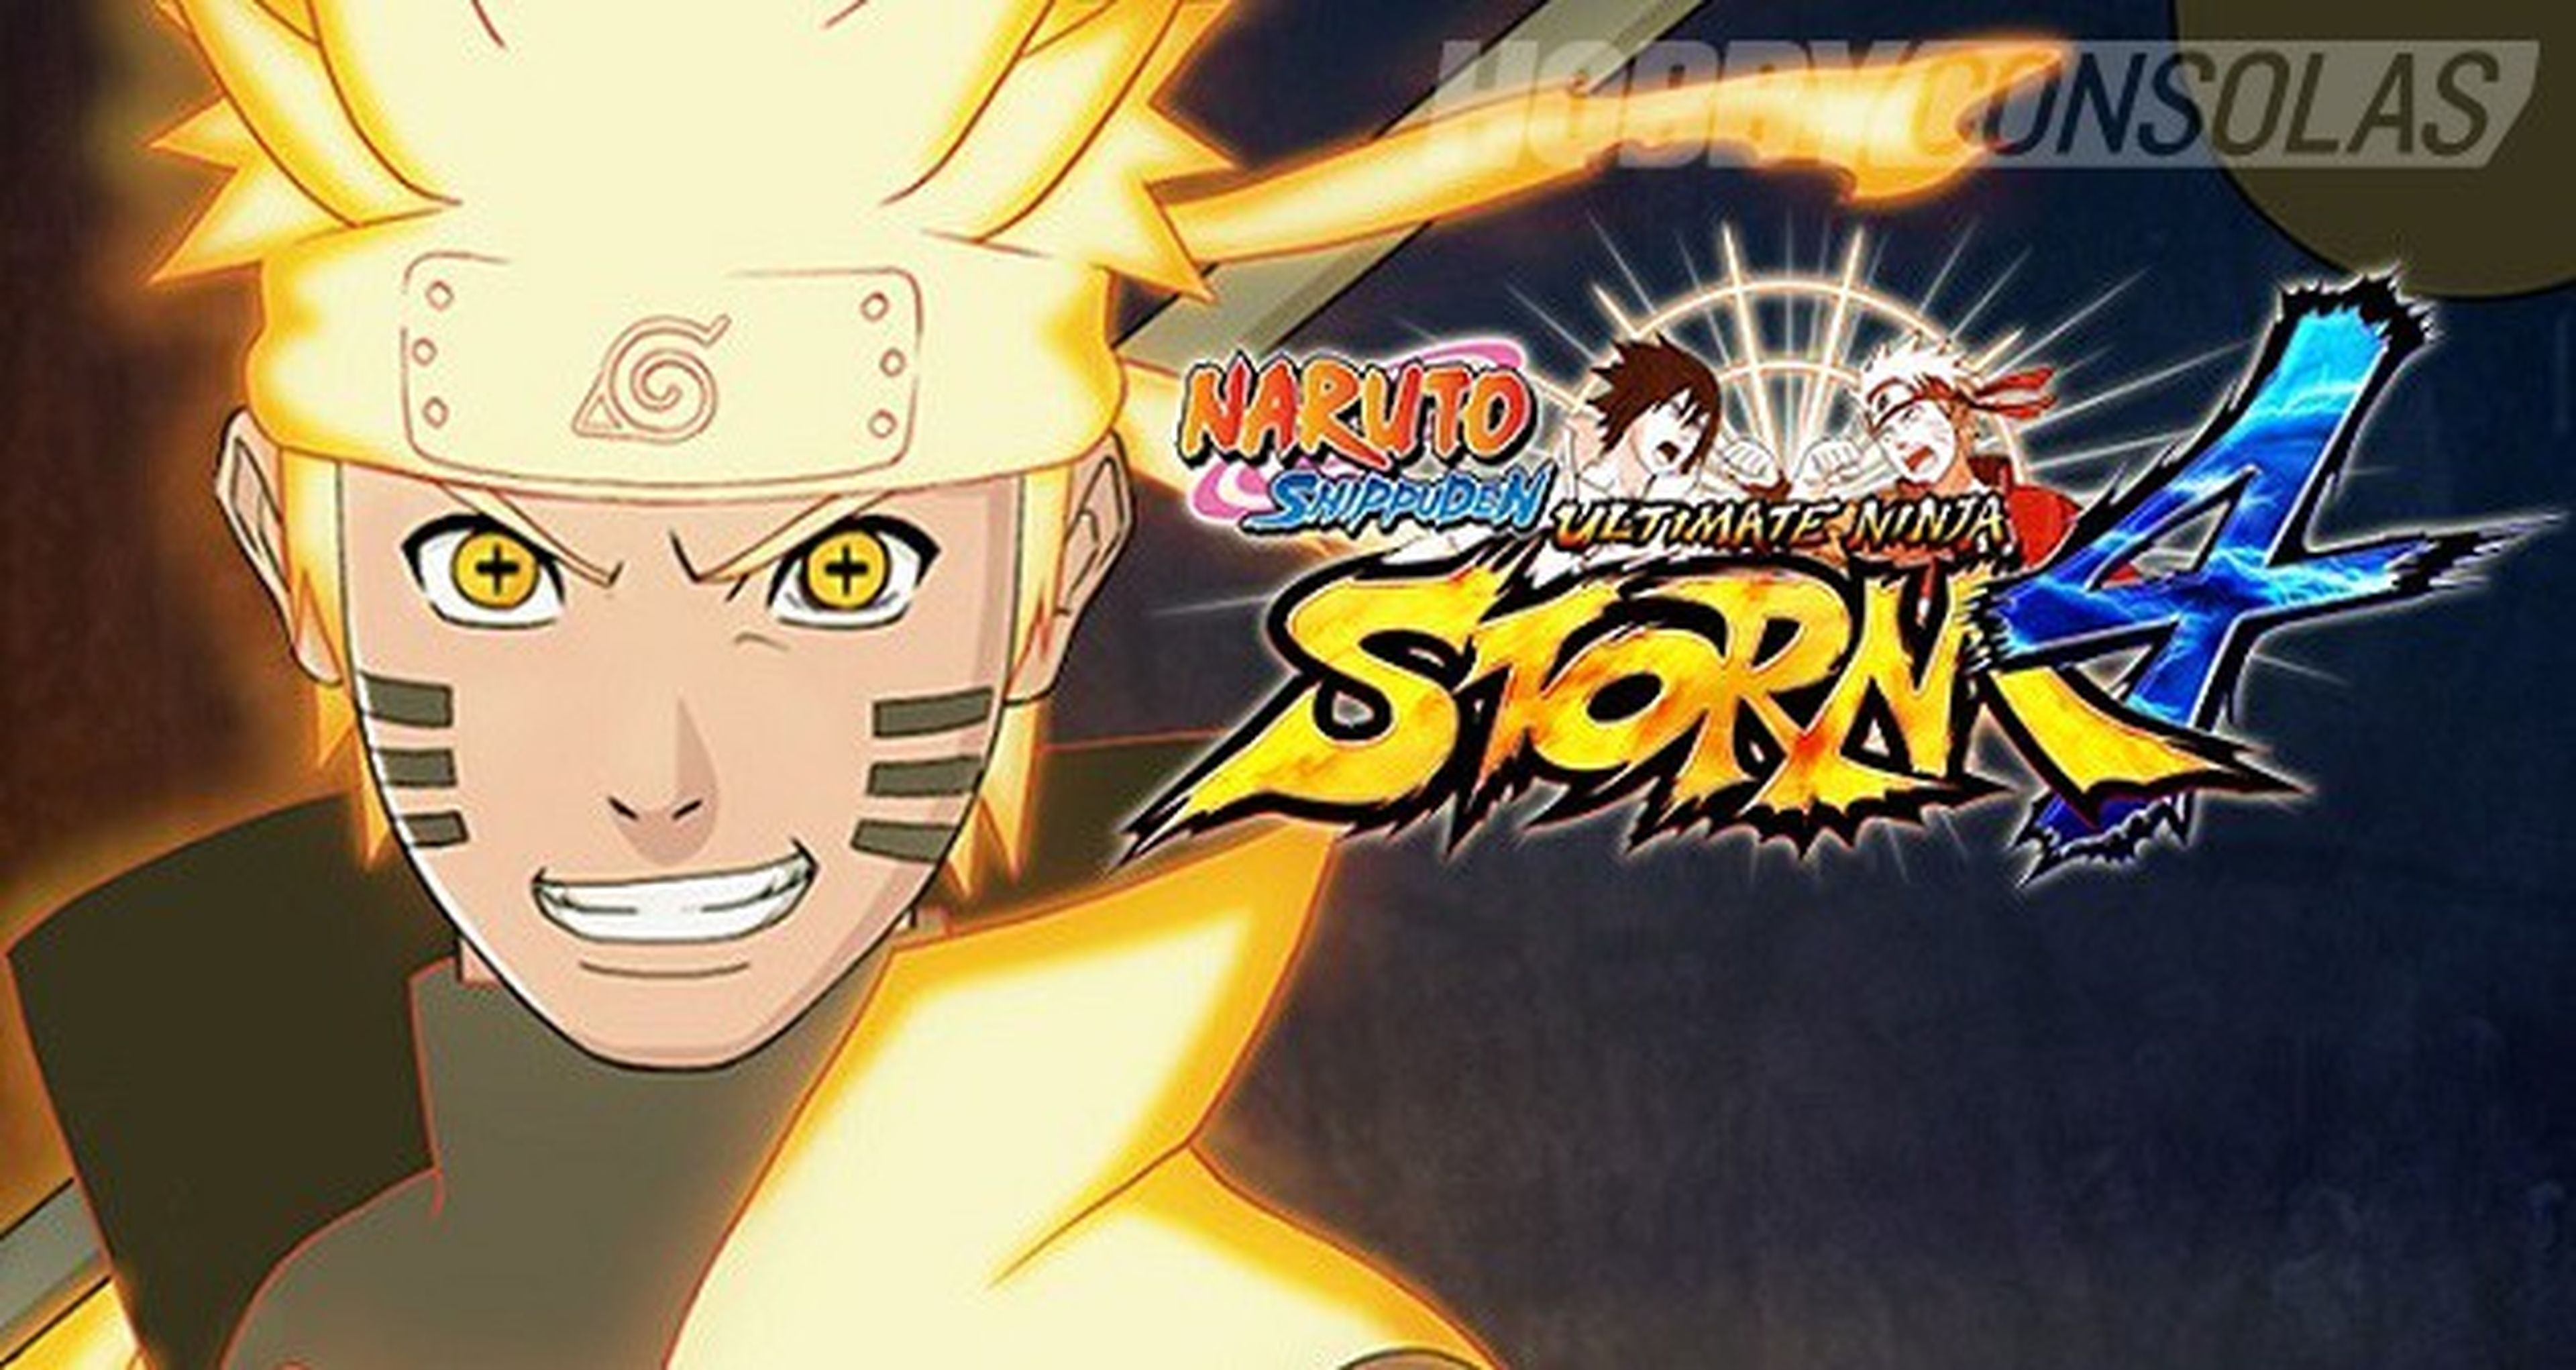 Naruto Shippuden Ultimate Ninja Storm 4 distribuye 1,3 millones de copias